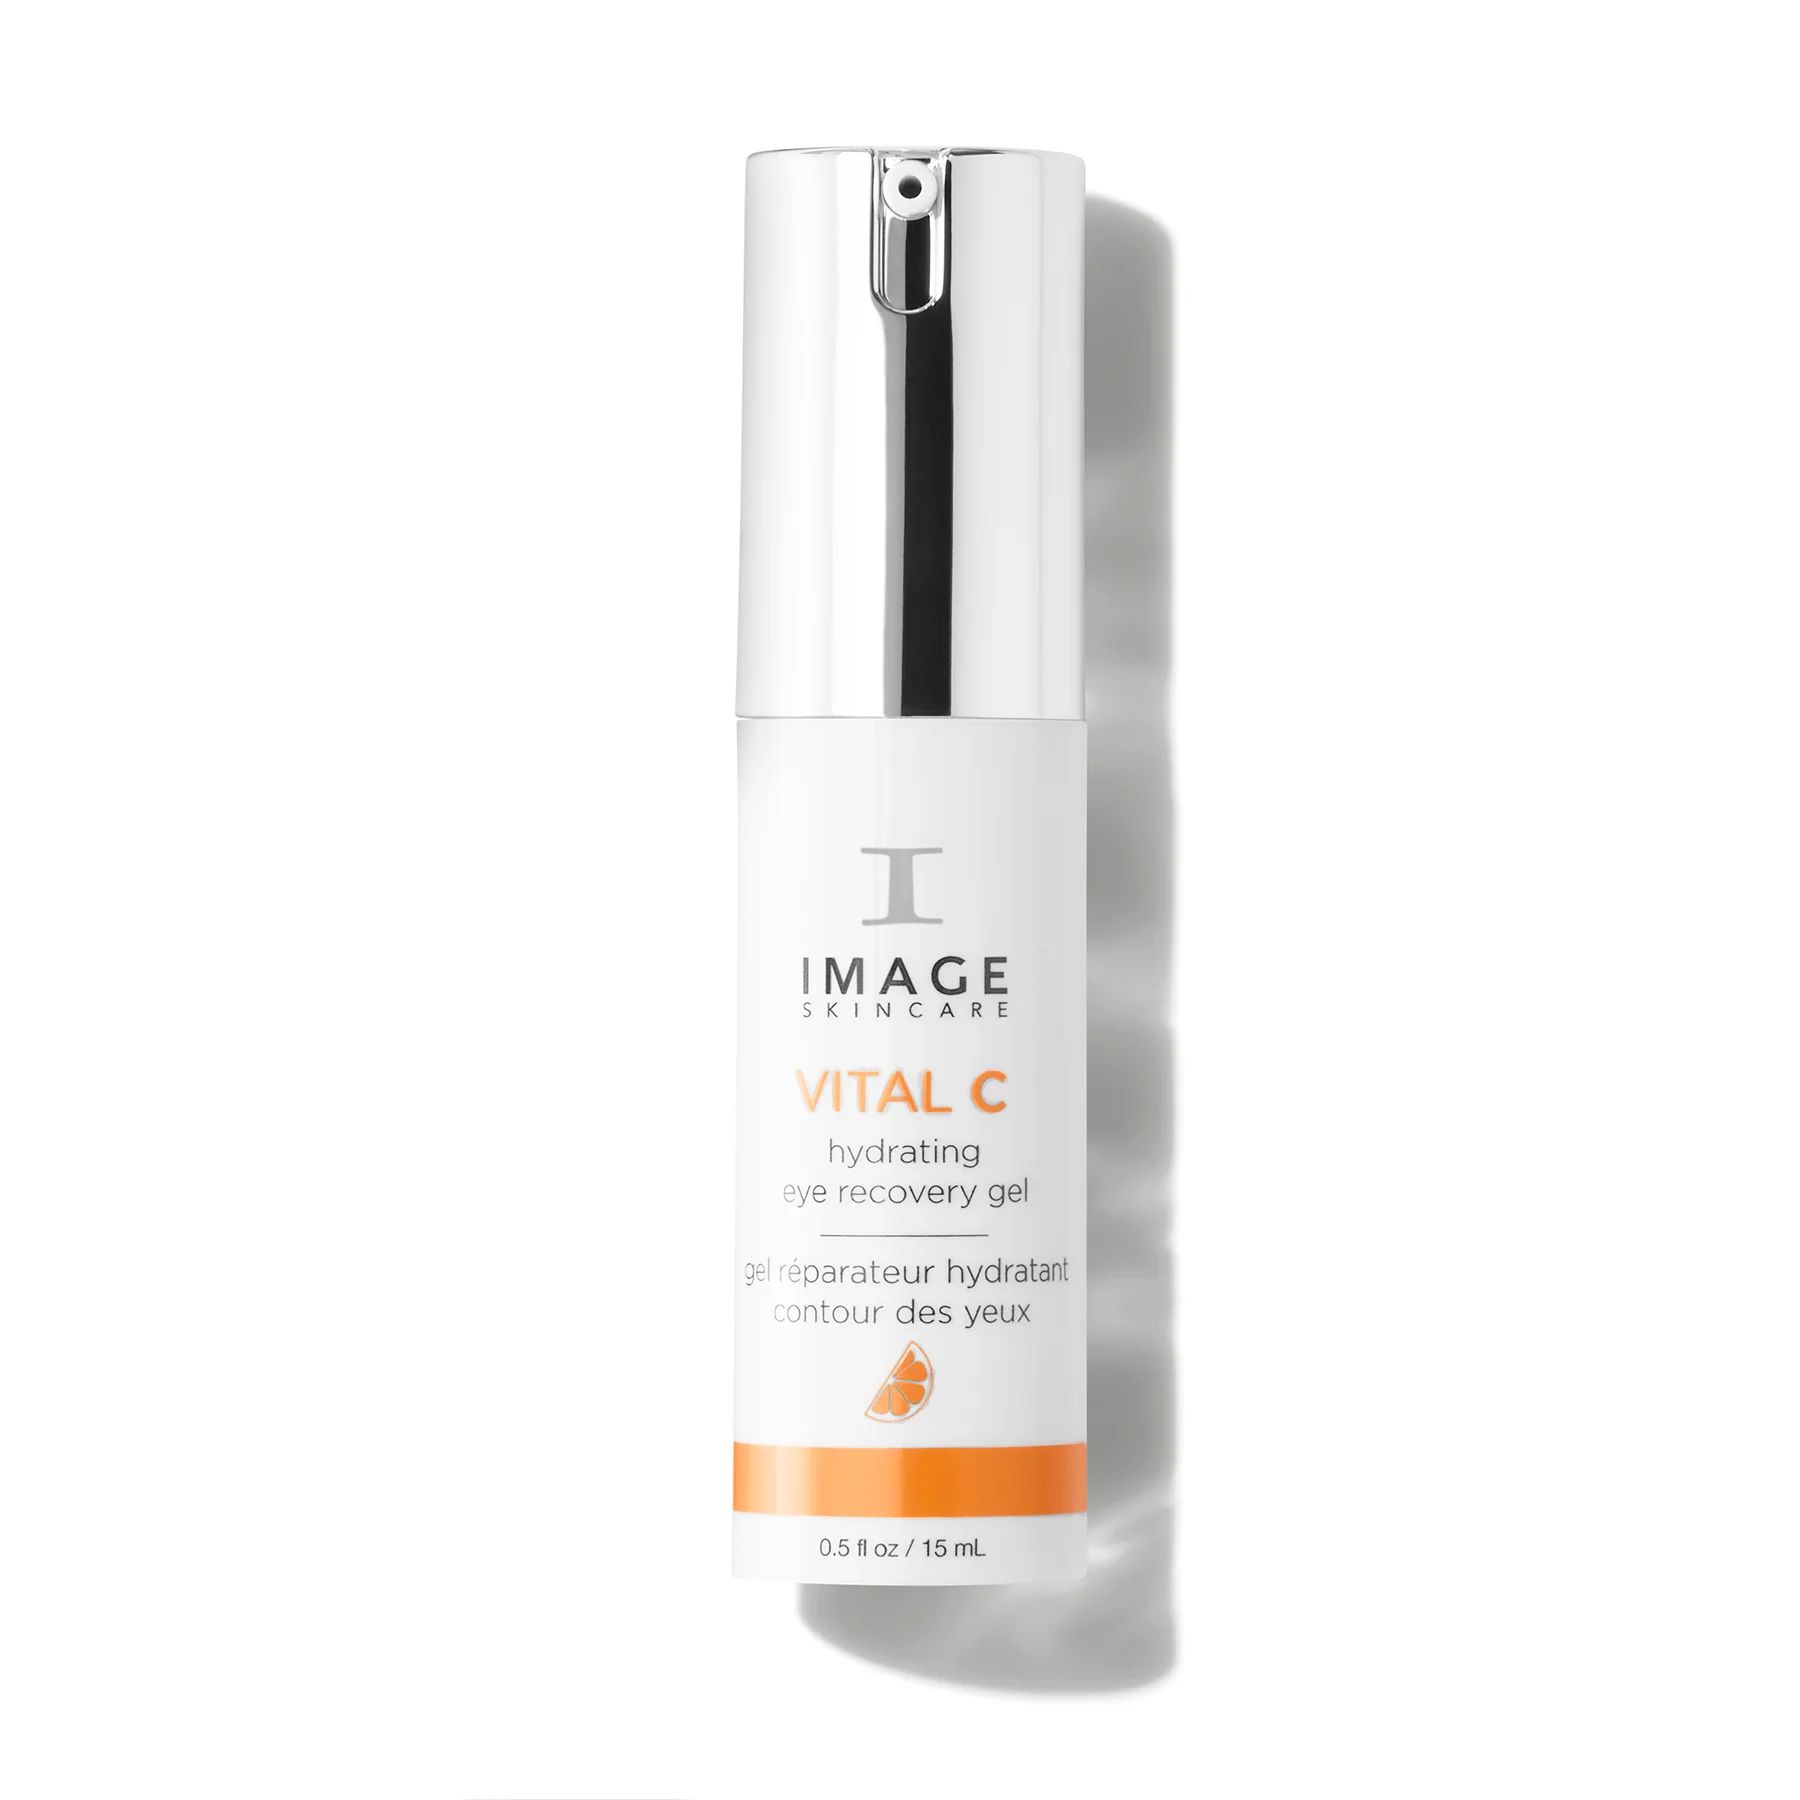 VITAL C hydrating eye recovery gel | Image Skincare